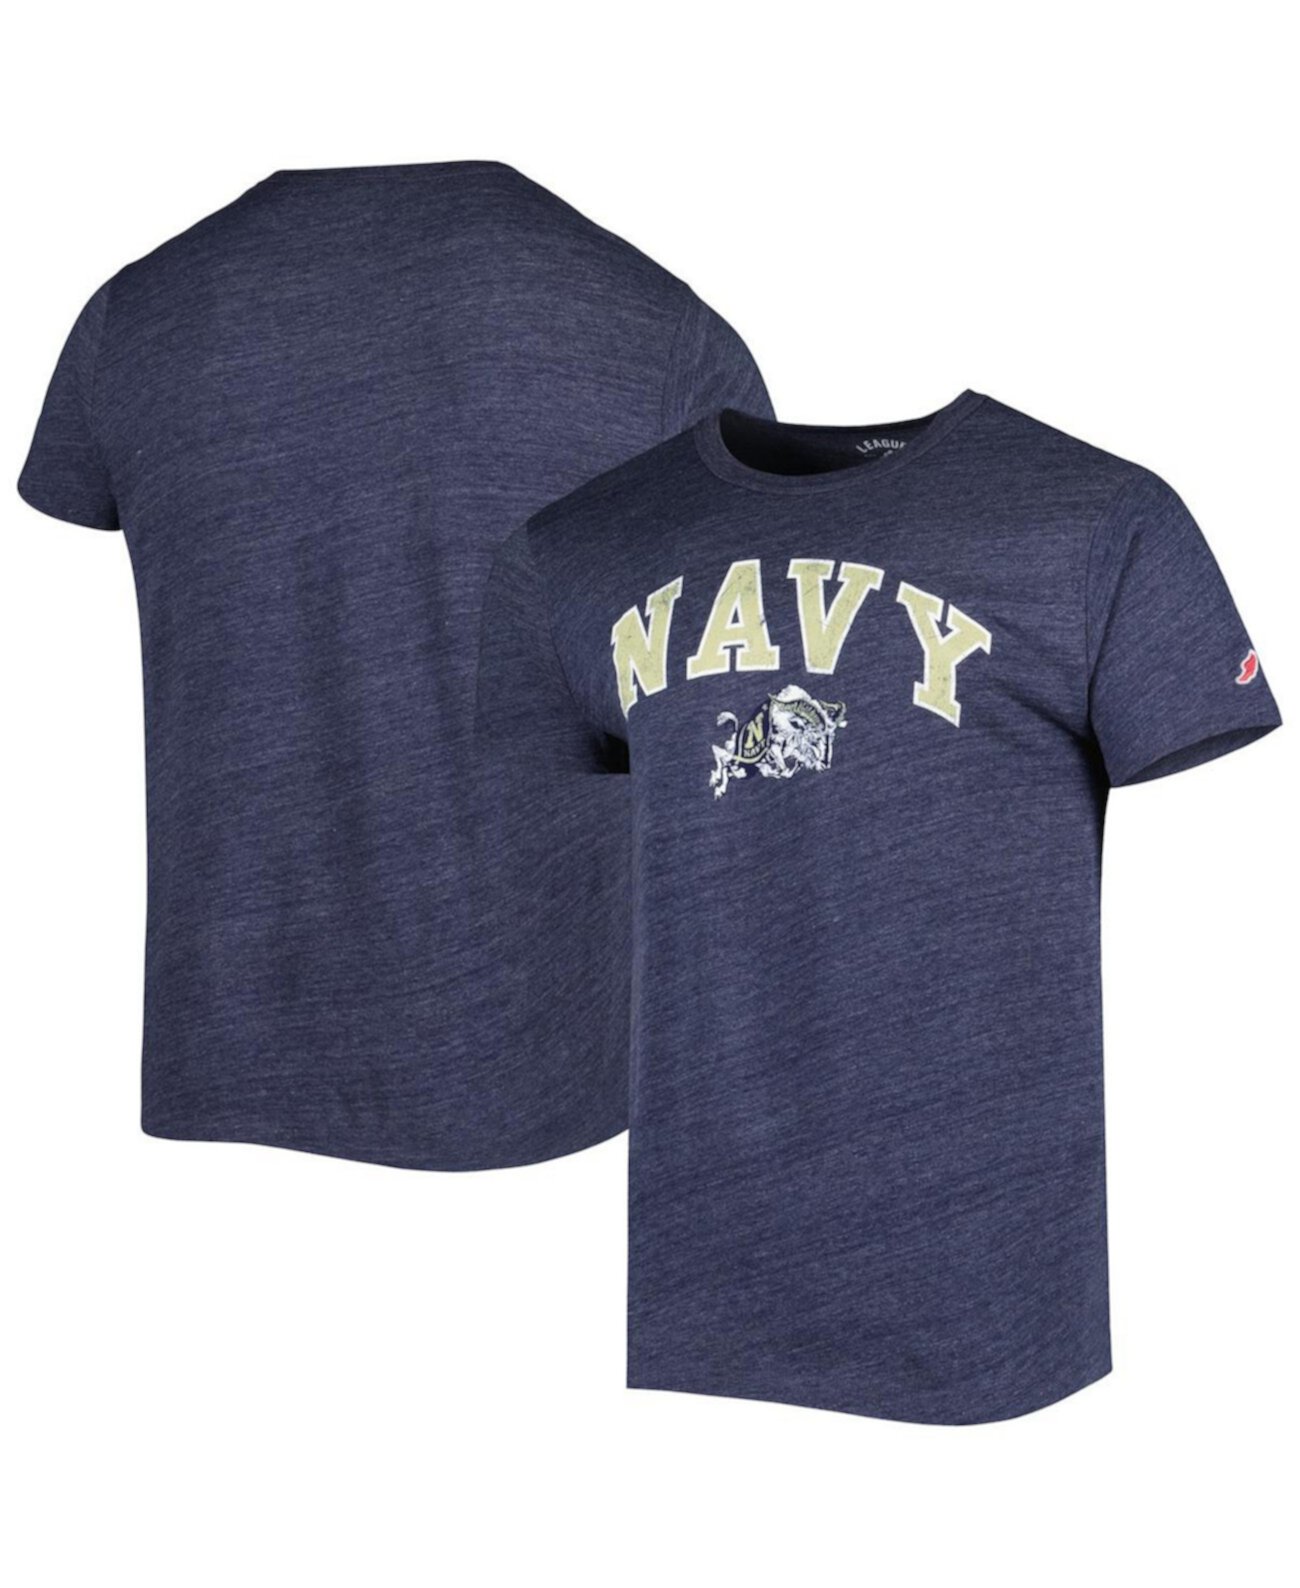 Мужская футболка Heather Navy Navy Midshipmen 1965 Arch Victory Falls Tri-Blend League Collegiate Wear